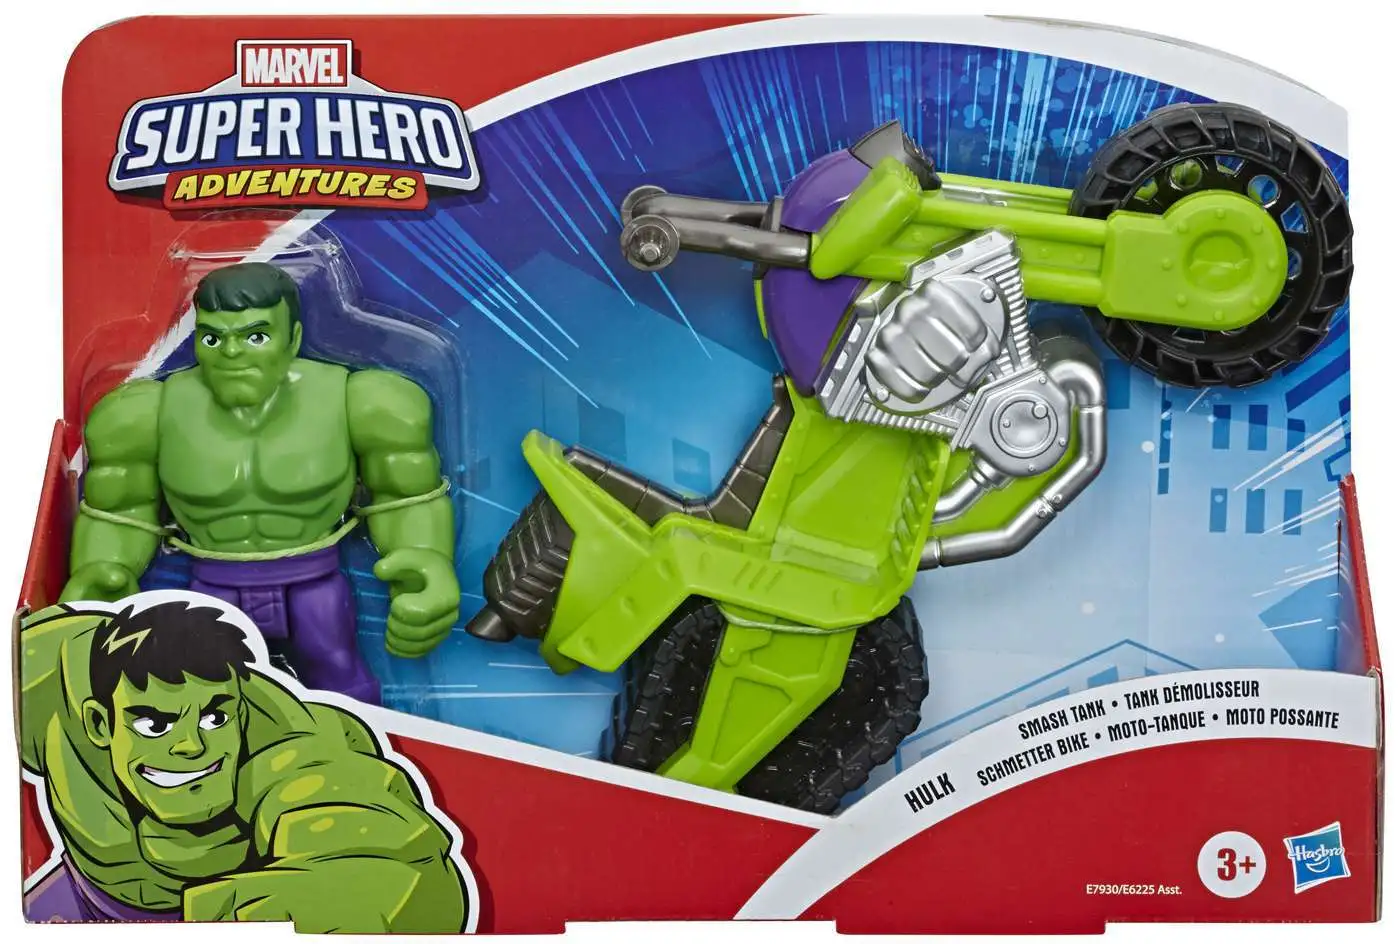 OFFICIAL NEW Playskool Marvel Super Hero Adventures Hulk 